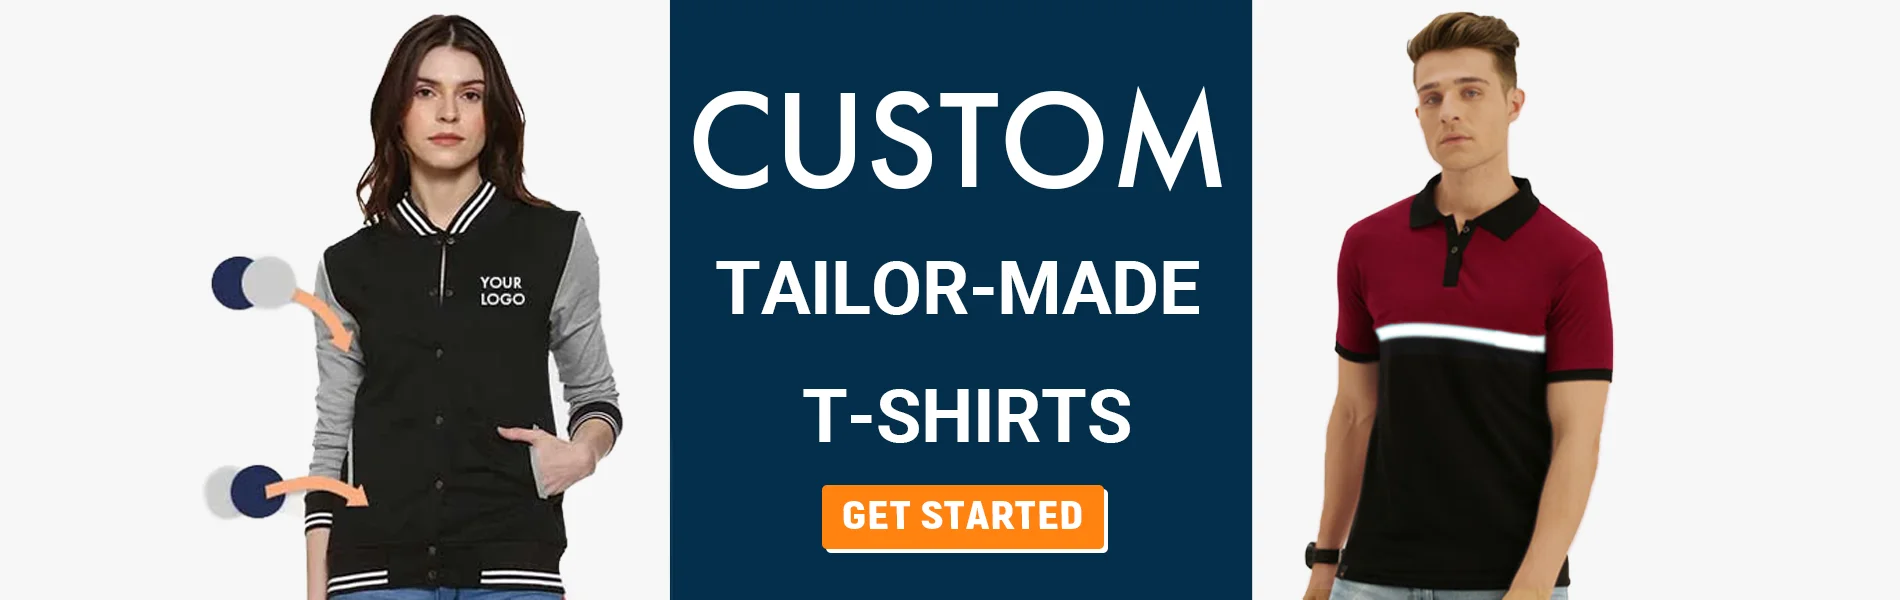 custom tailormade t-shirts bhubaneswar